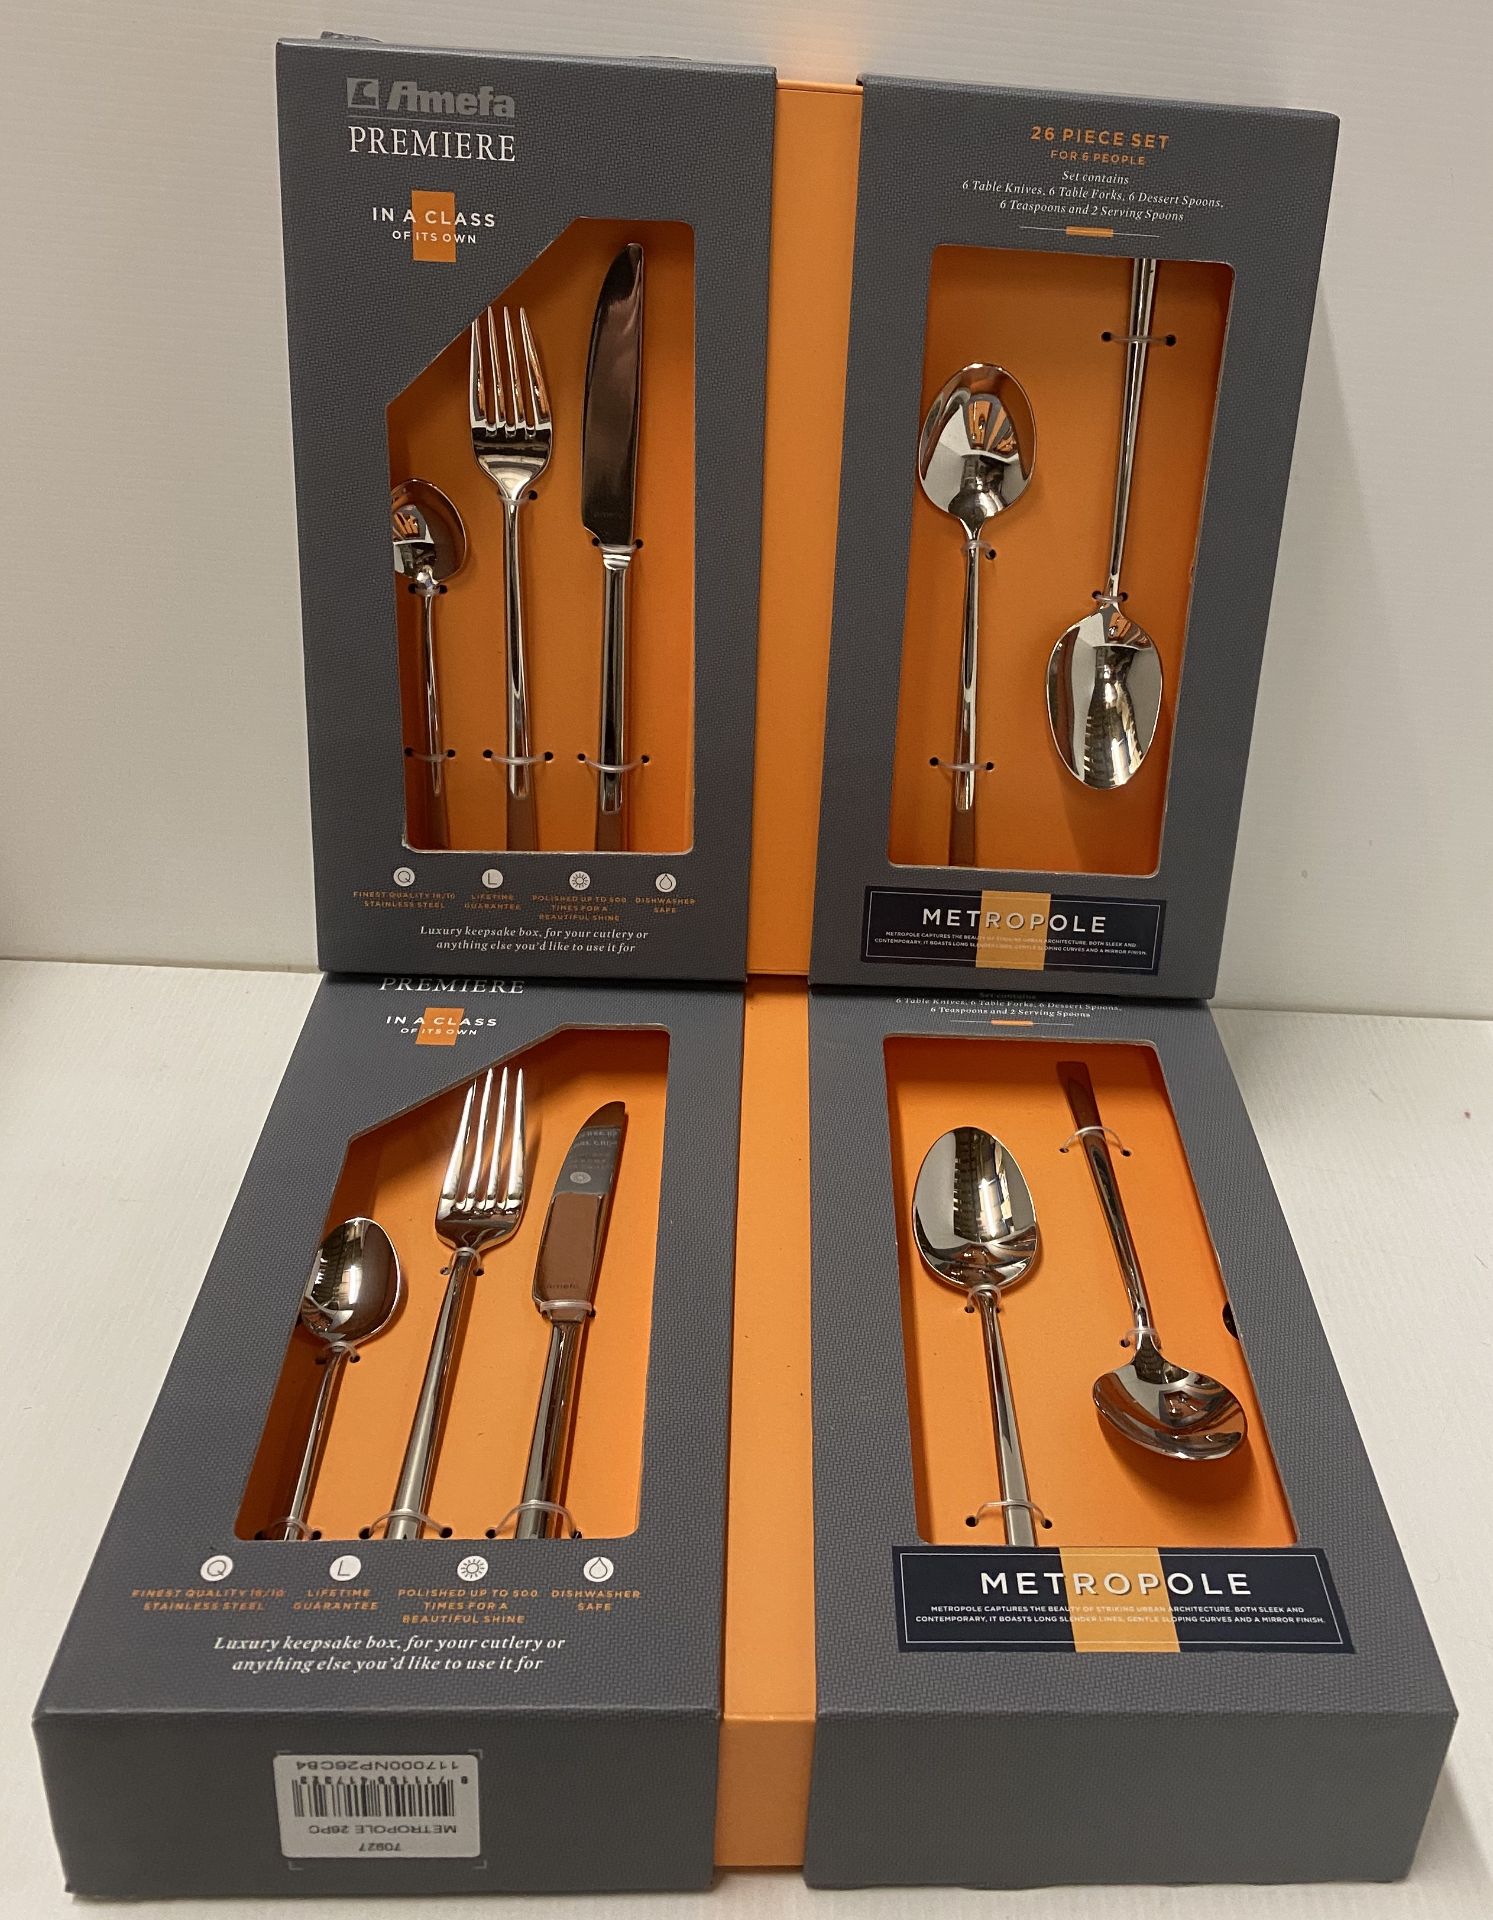 2 x Amefa Premier Metropole 26 piece cutlery sets RRP £93.